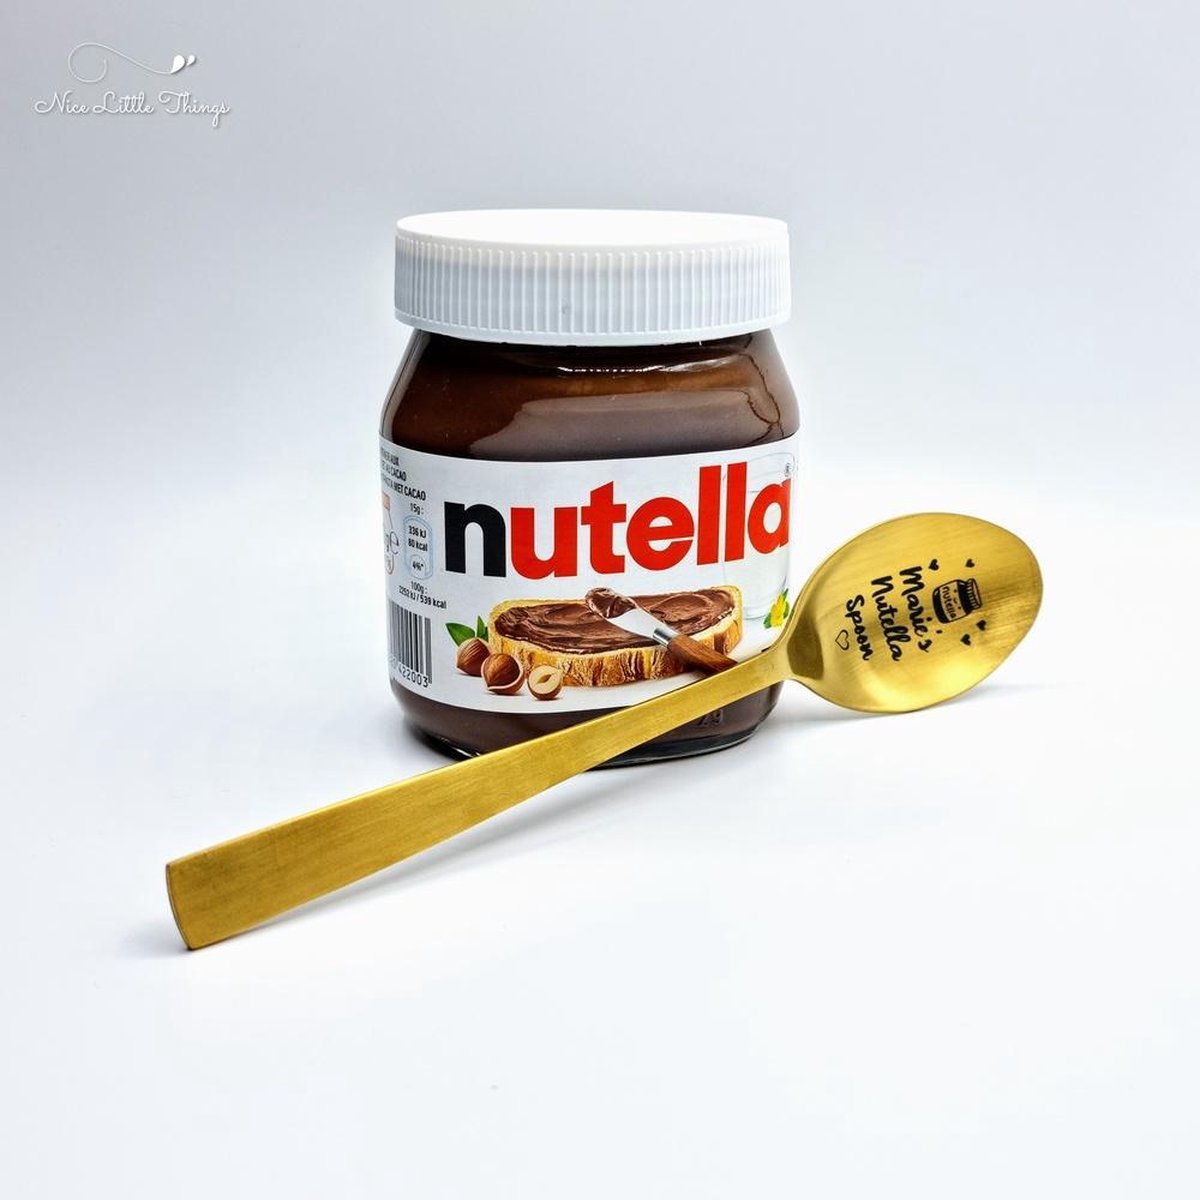 [Nice petites choses] Cuillère Nutella dorée | bol.com